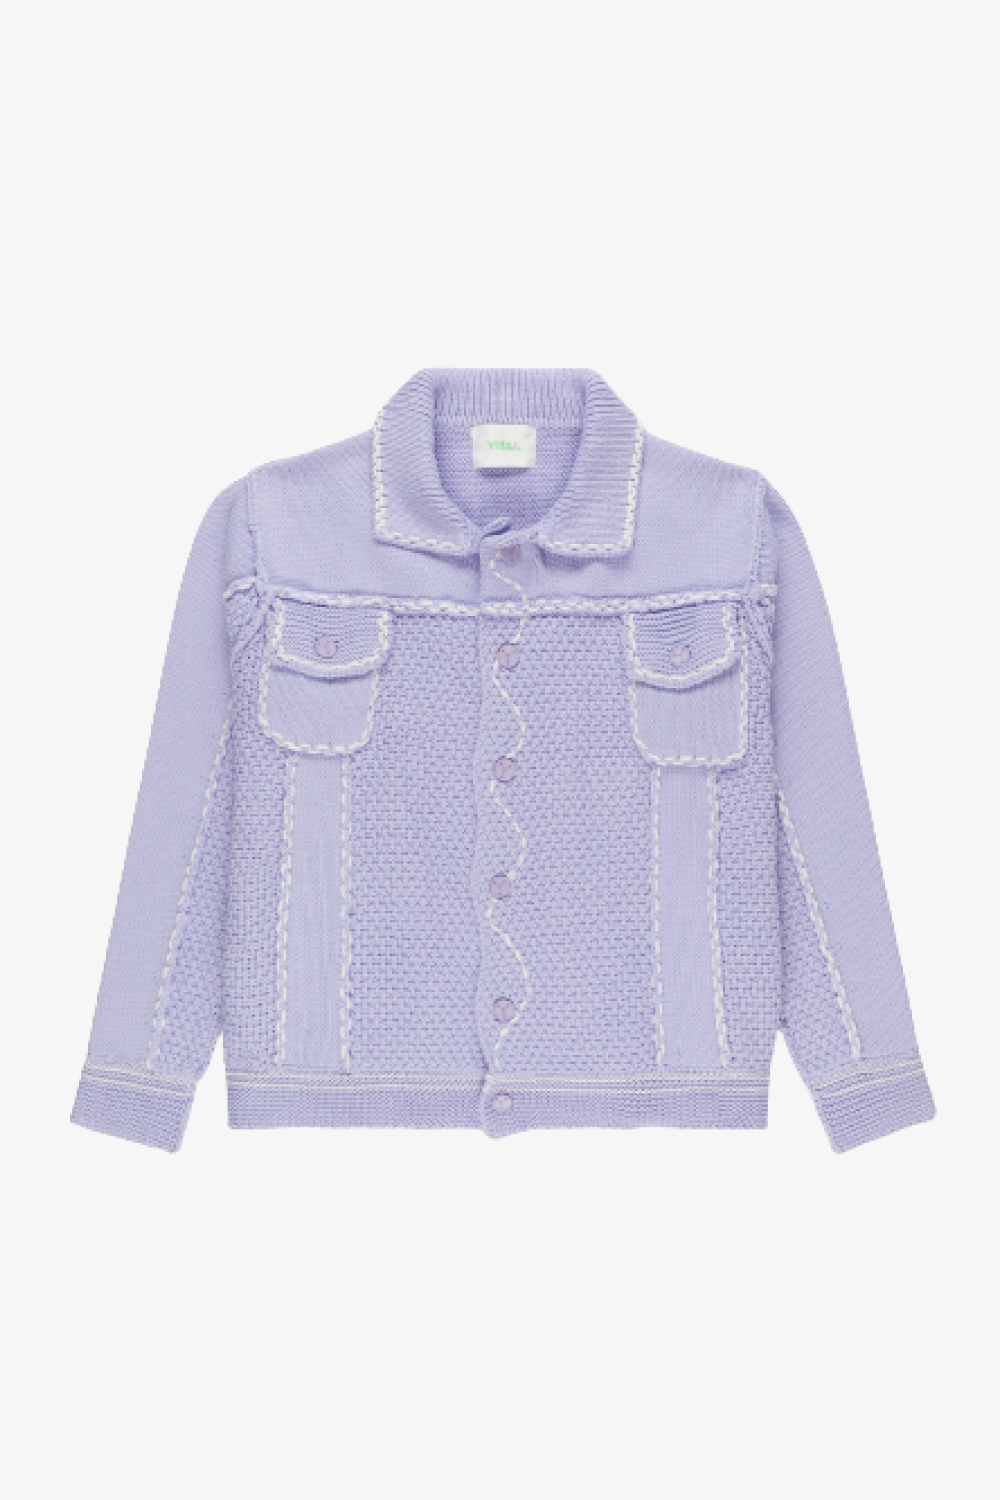 Hand Stitch Knit Jacket (Lavender)